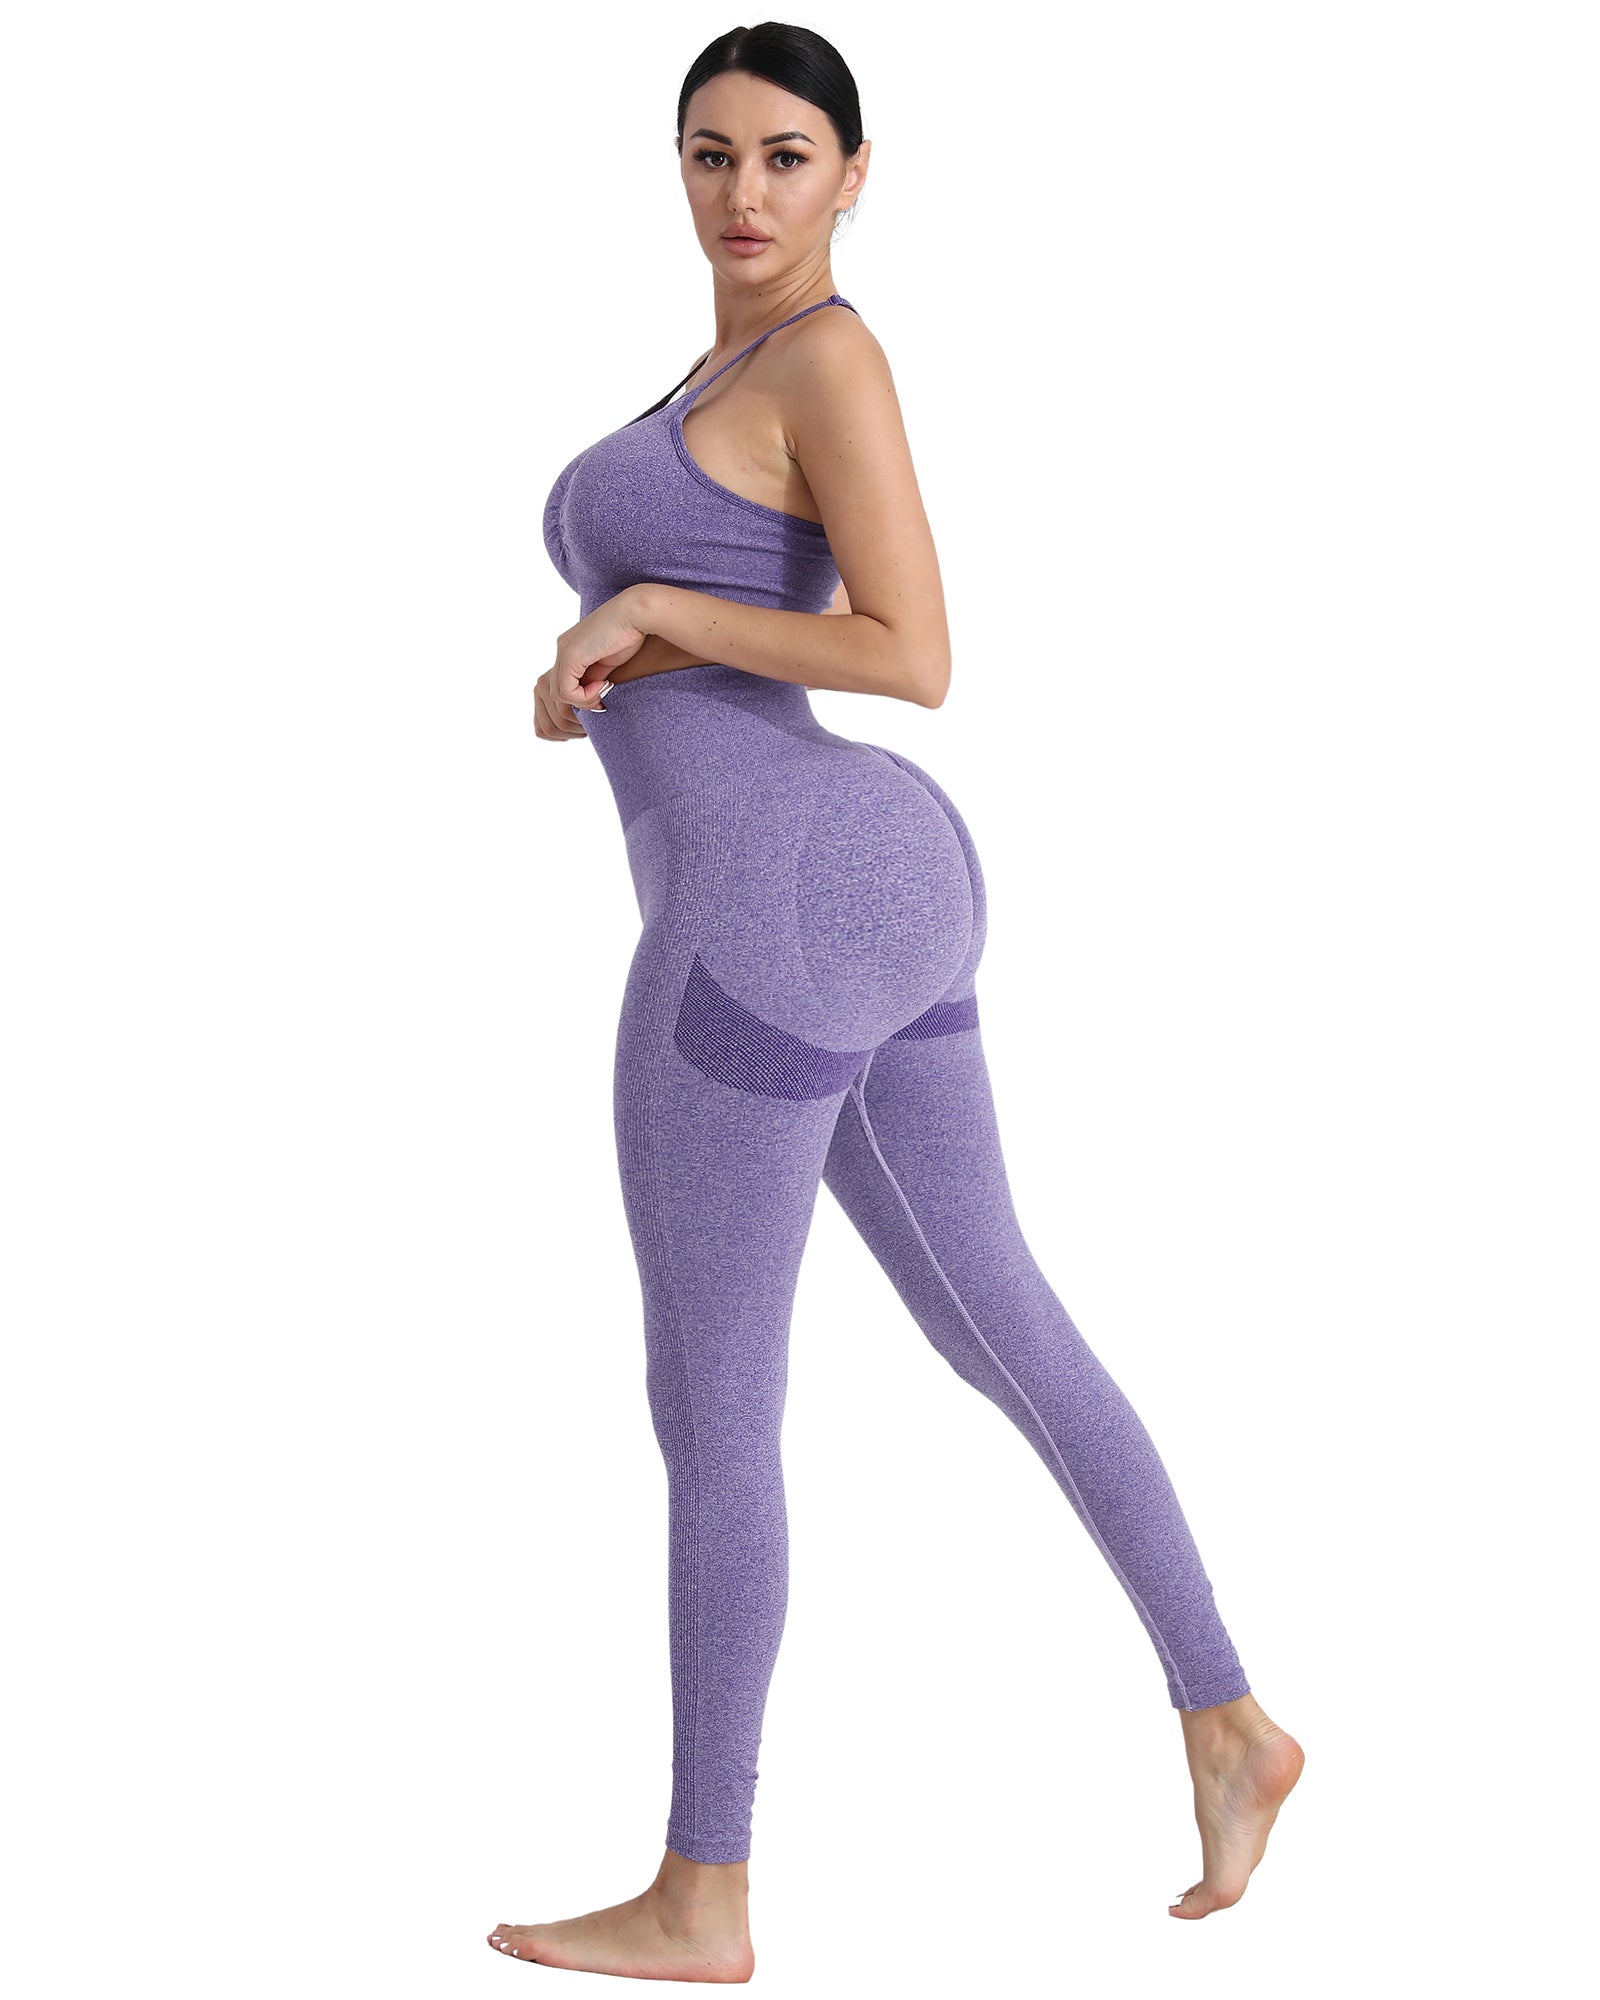 girl wearing purple yoga pants and purple top